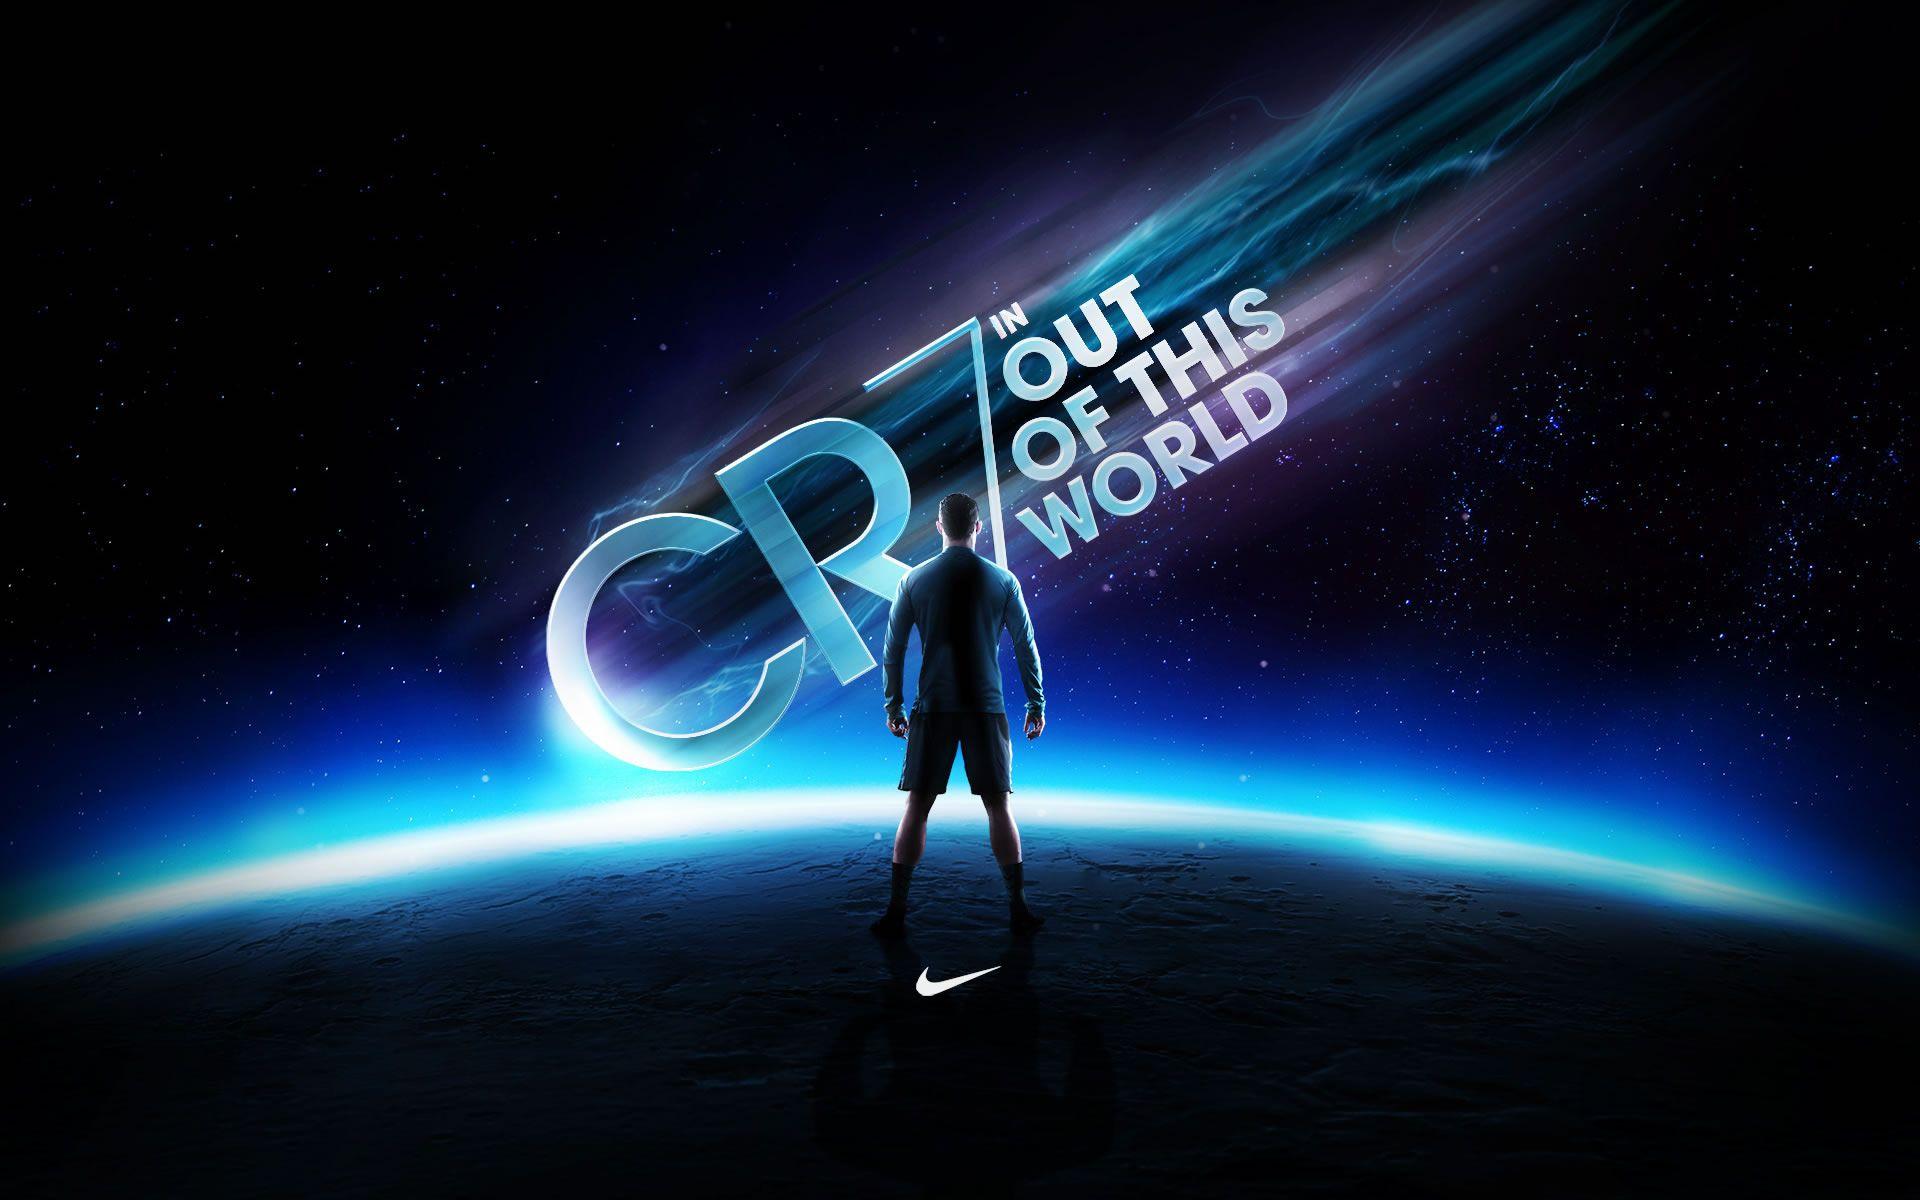 Logo Cr7 Wallpapers